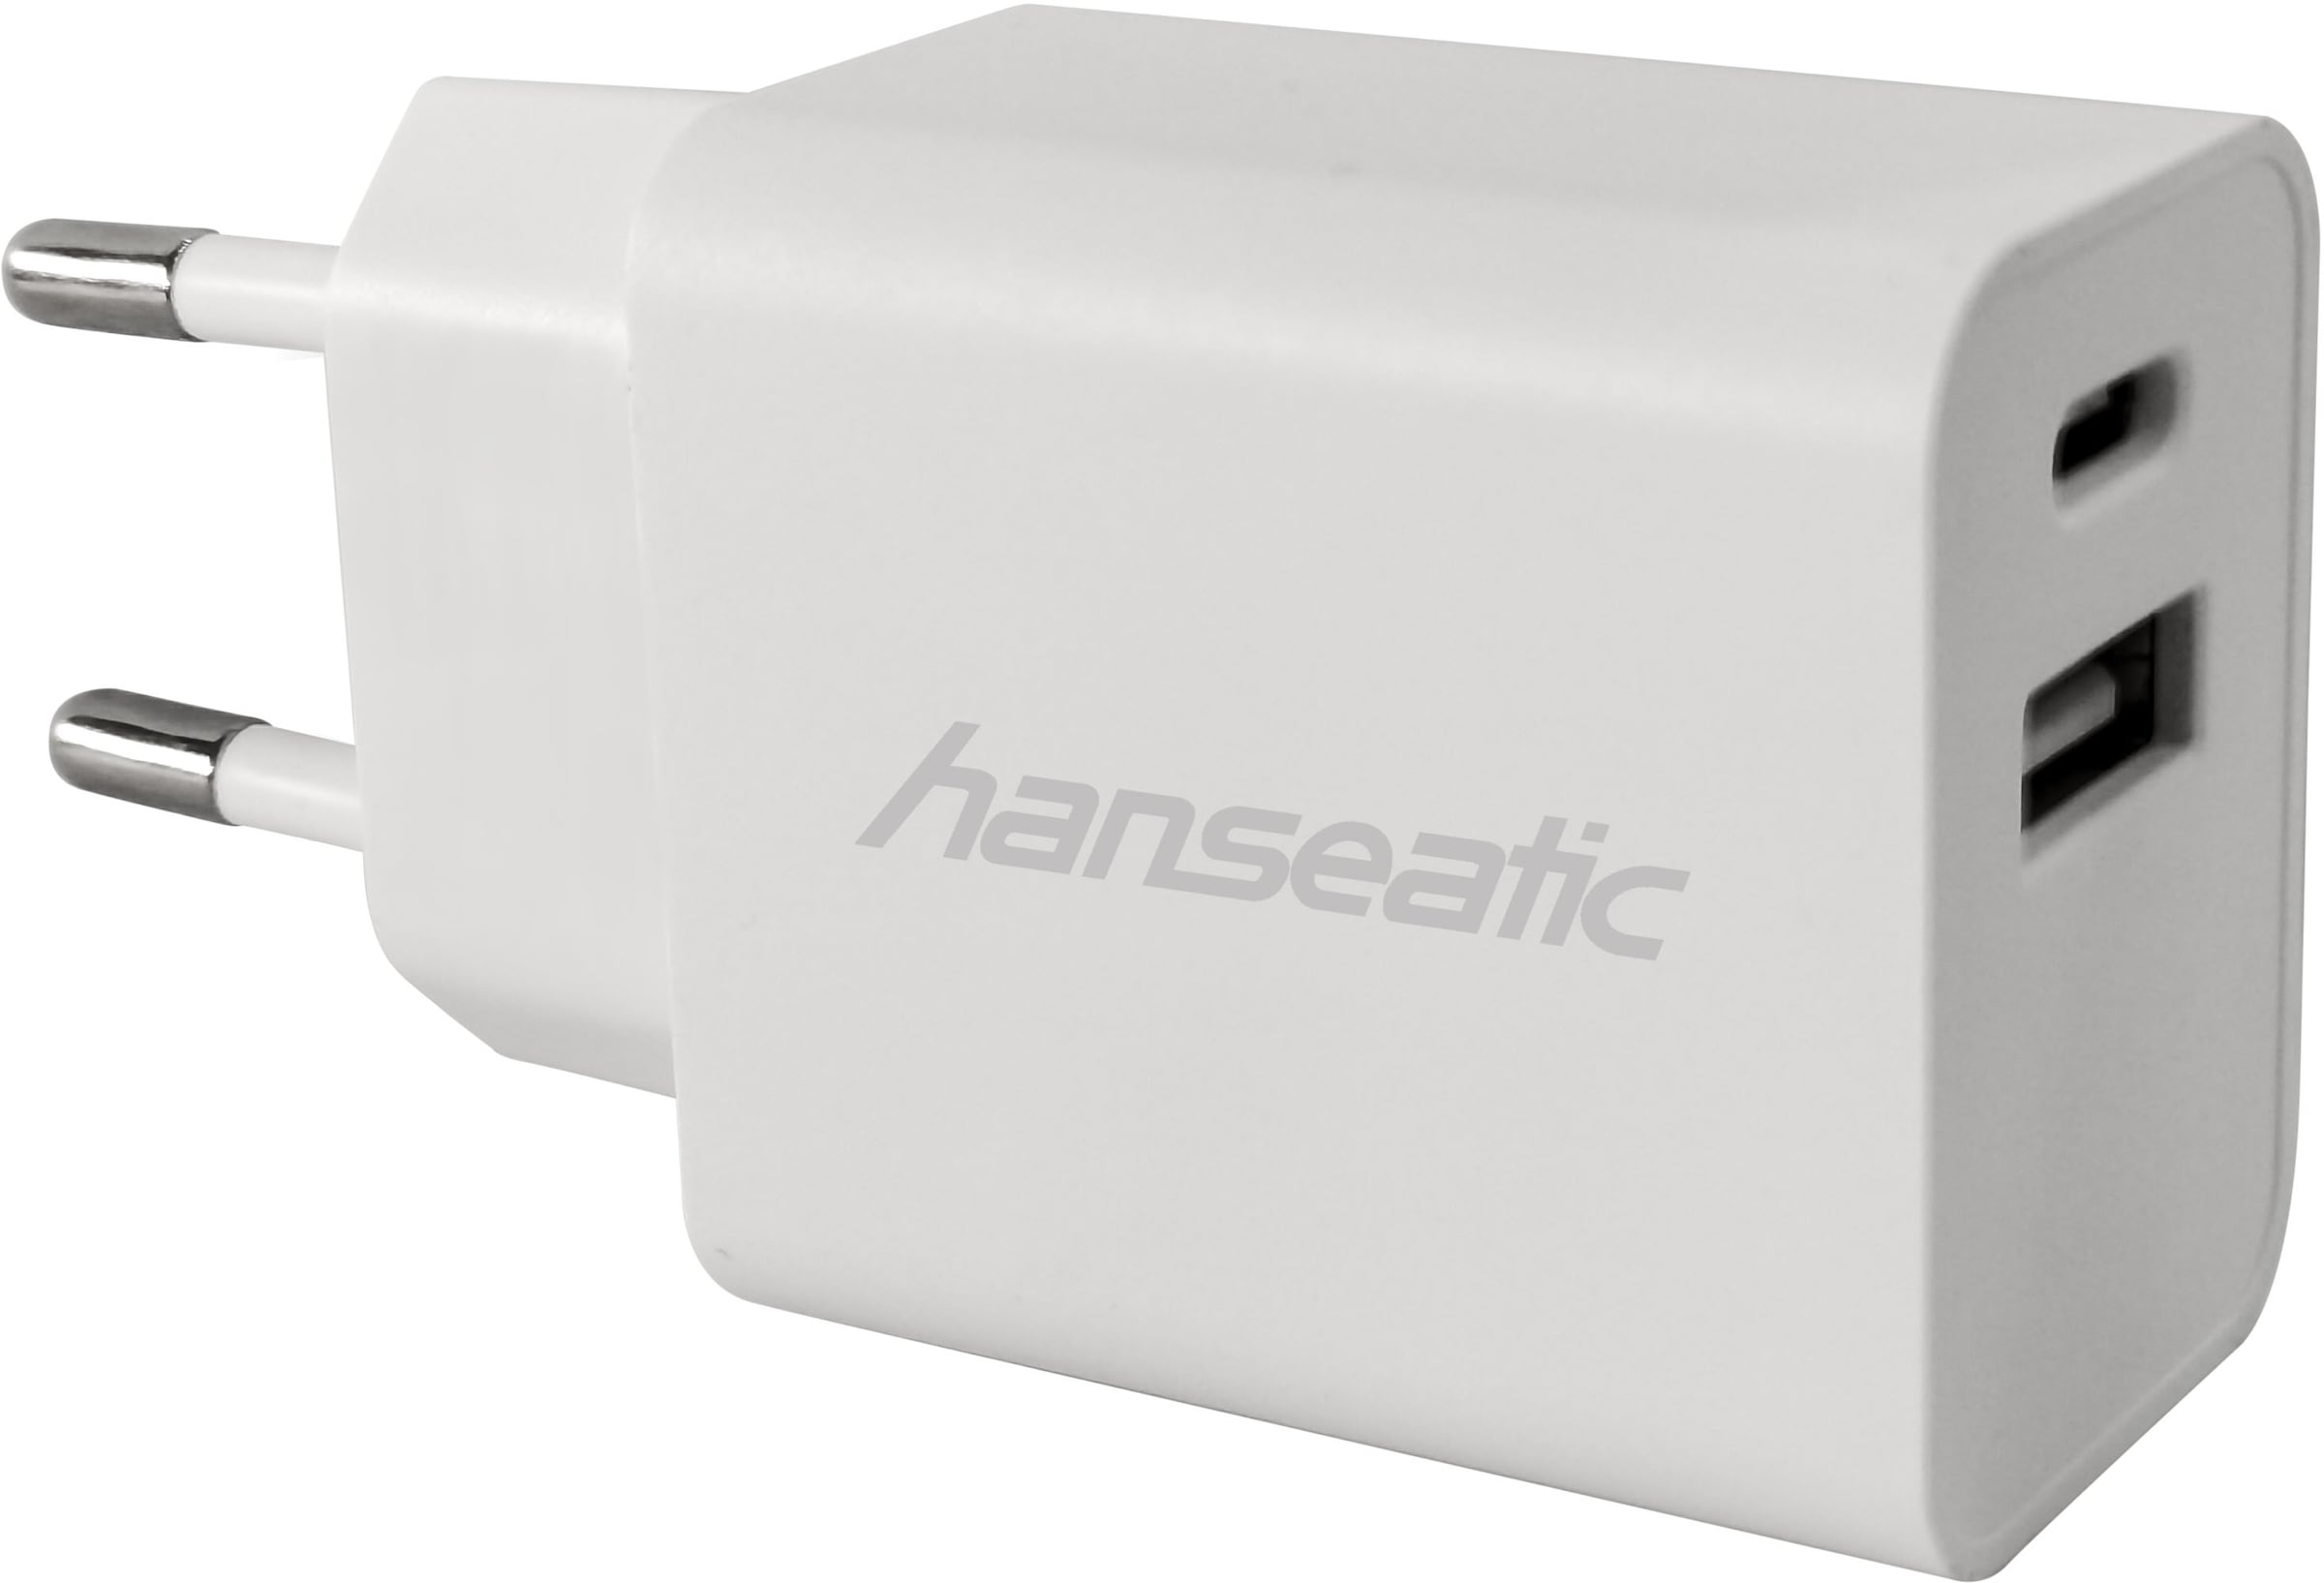 (PD) BAUR | Smartphone-Ladegerät, USB (Power Delivery Ladegerät Hanseatic und 20W universal Ladekabel